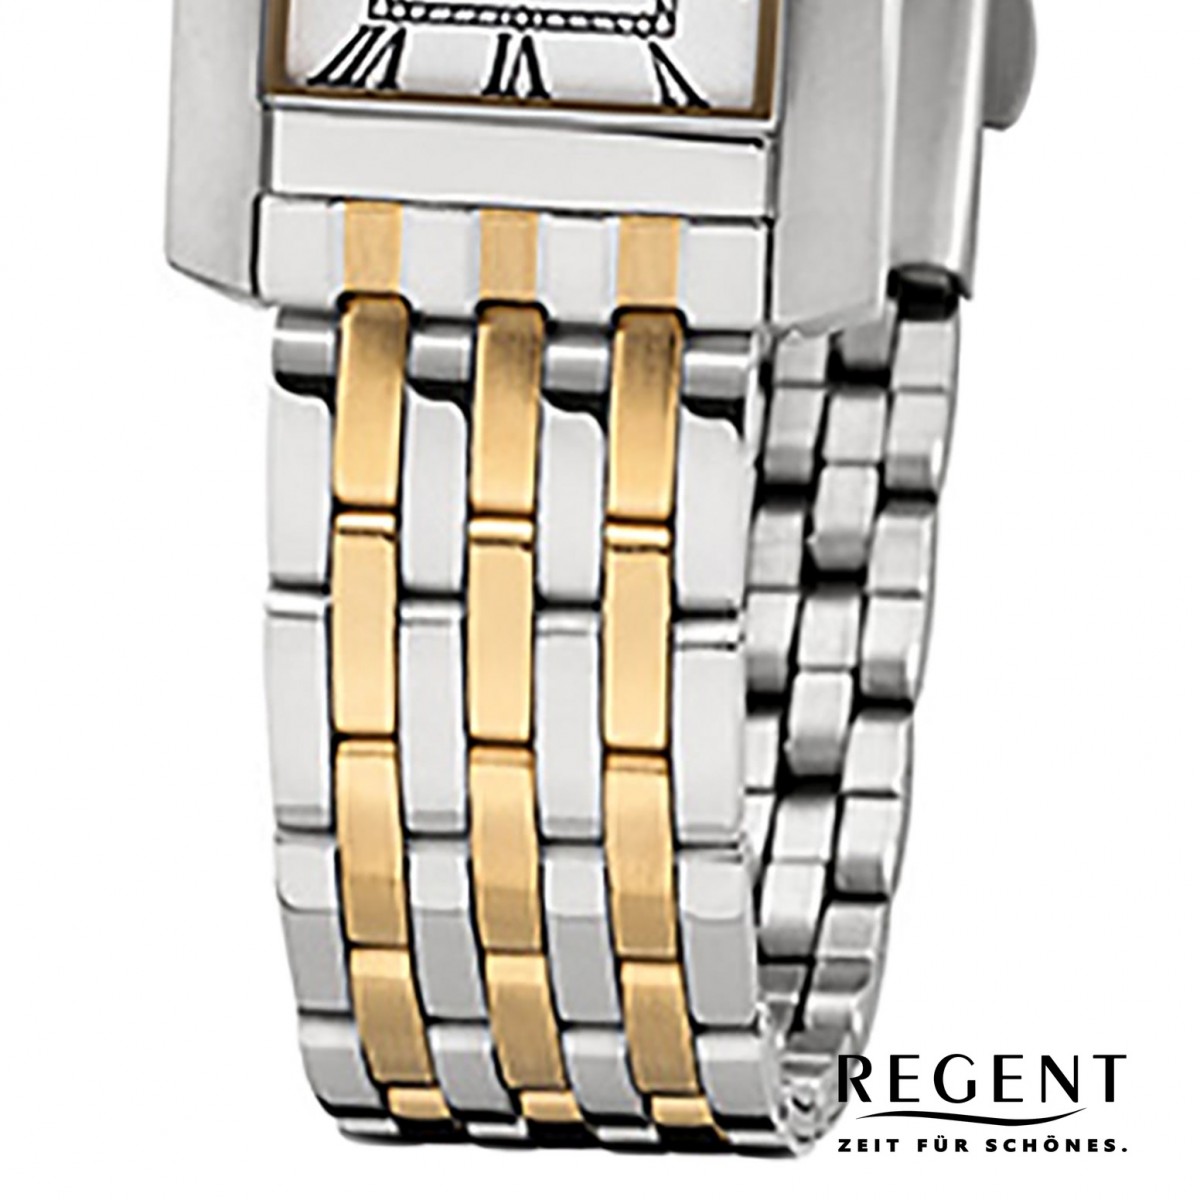 Regent Damen-Armbanduhr 32-F-1052 Quarz-Uhr Edelstahl-Armband silber gold  URF105 URF1052